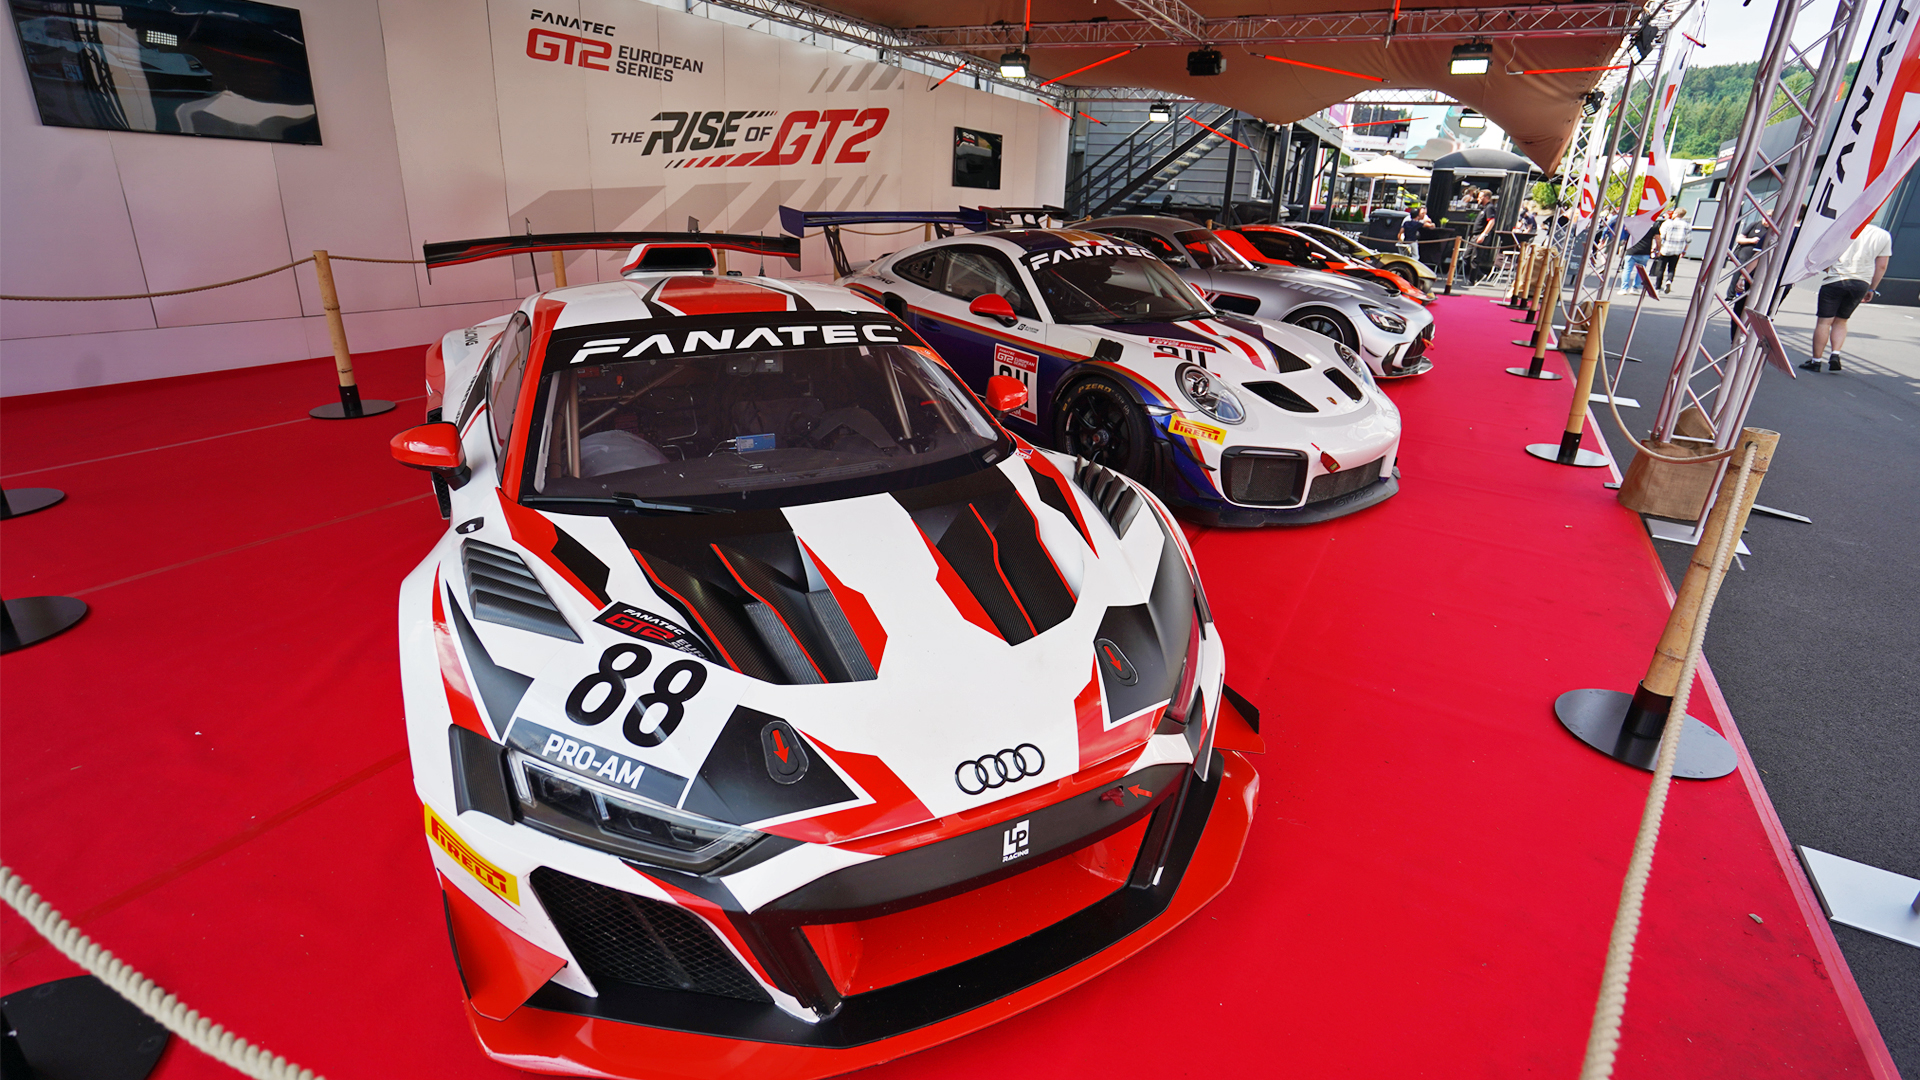 Fanatec GT2 European Series Press Event, Spa-Francorchamps 2022